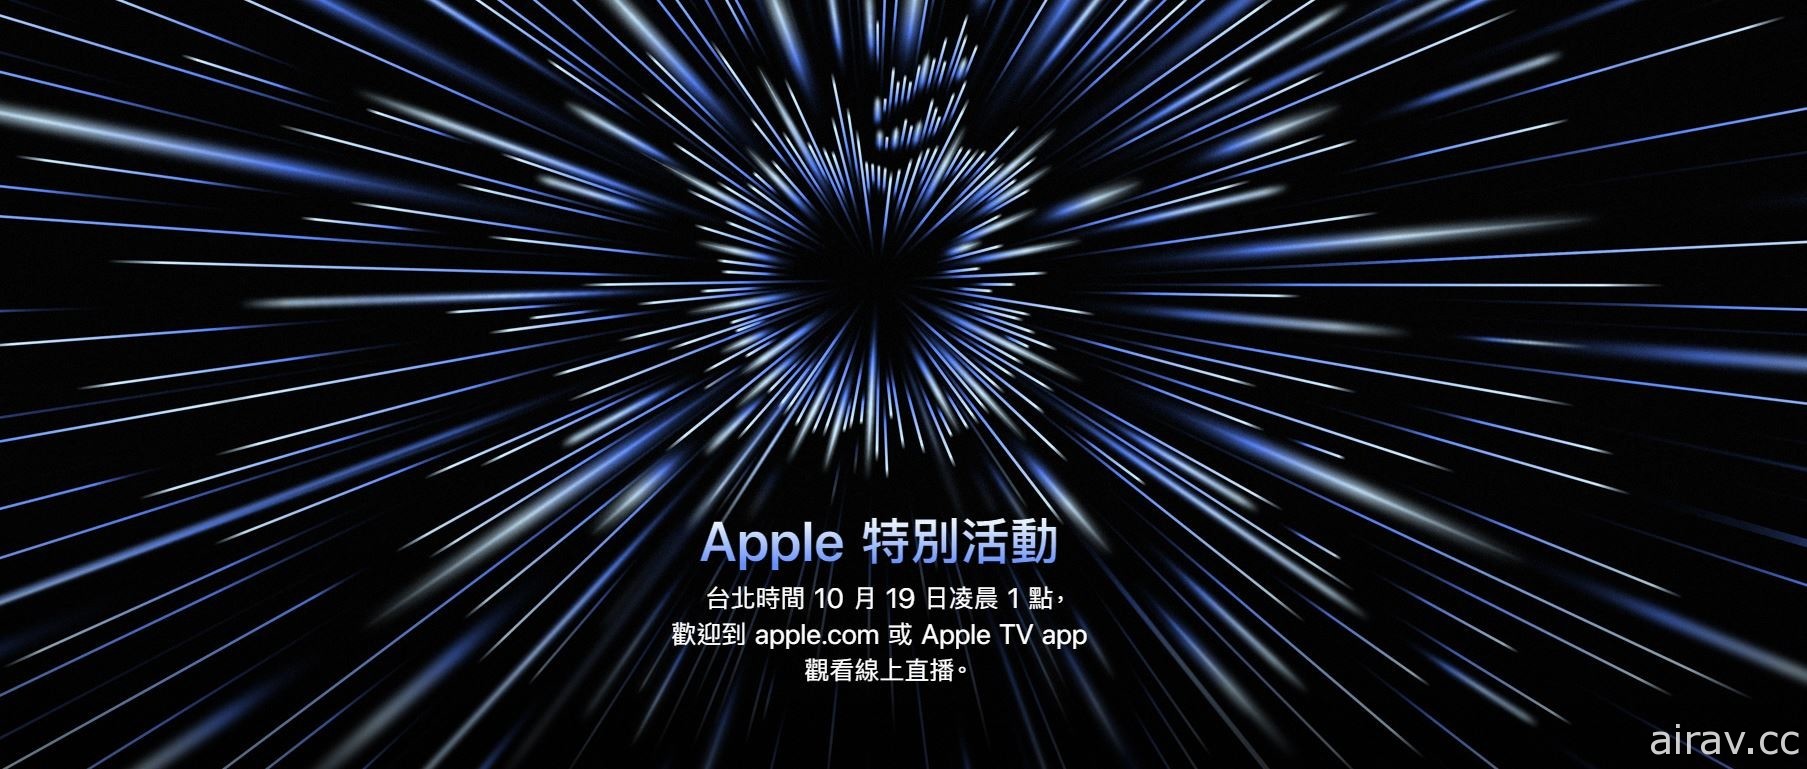 苹果第二场秋季发表会将于 10 月 19 日登场 主题为“Unleashed”